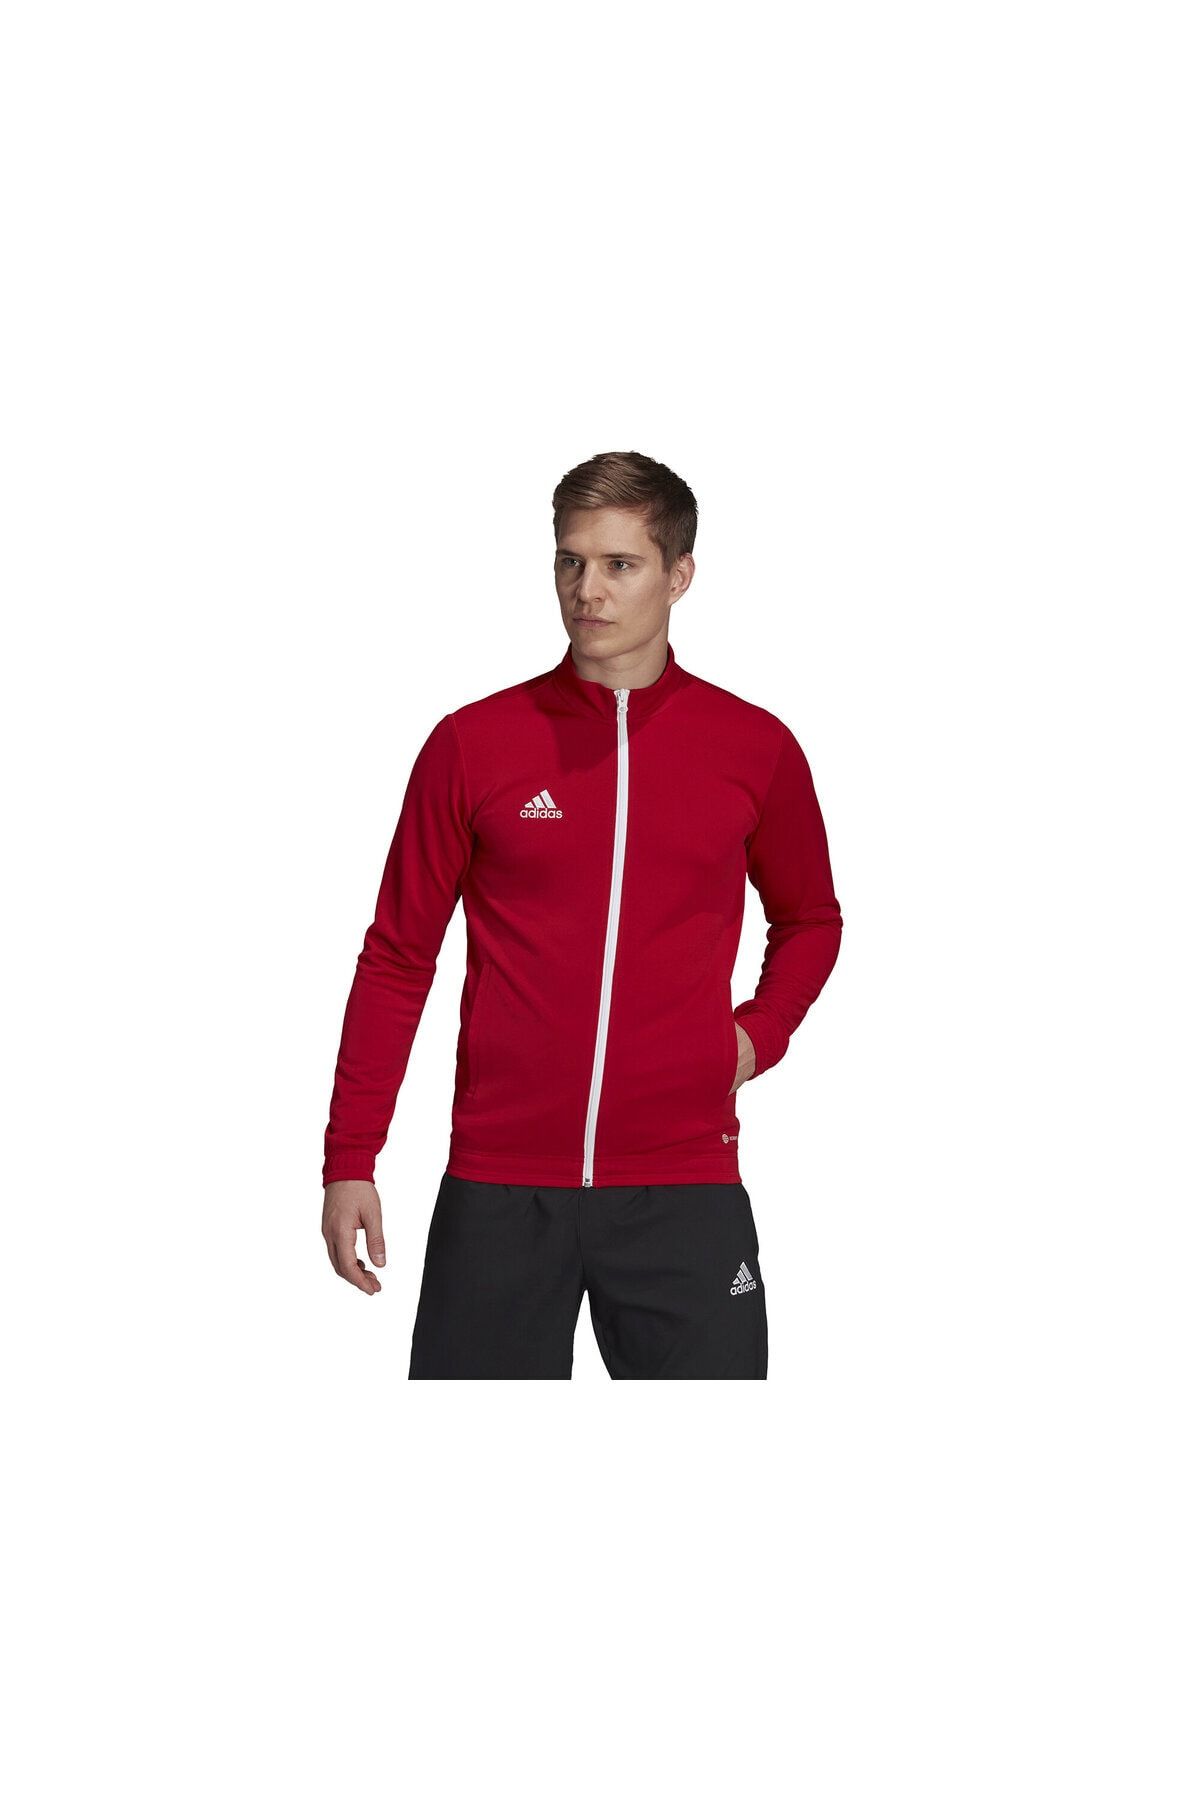 adidas Ent22 Tk Jkt Erkek Futbol Antrenman Ceketi H57537 Kırmızı